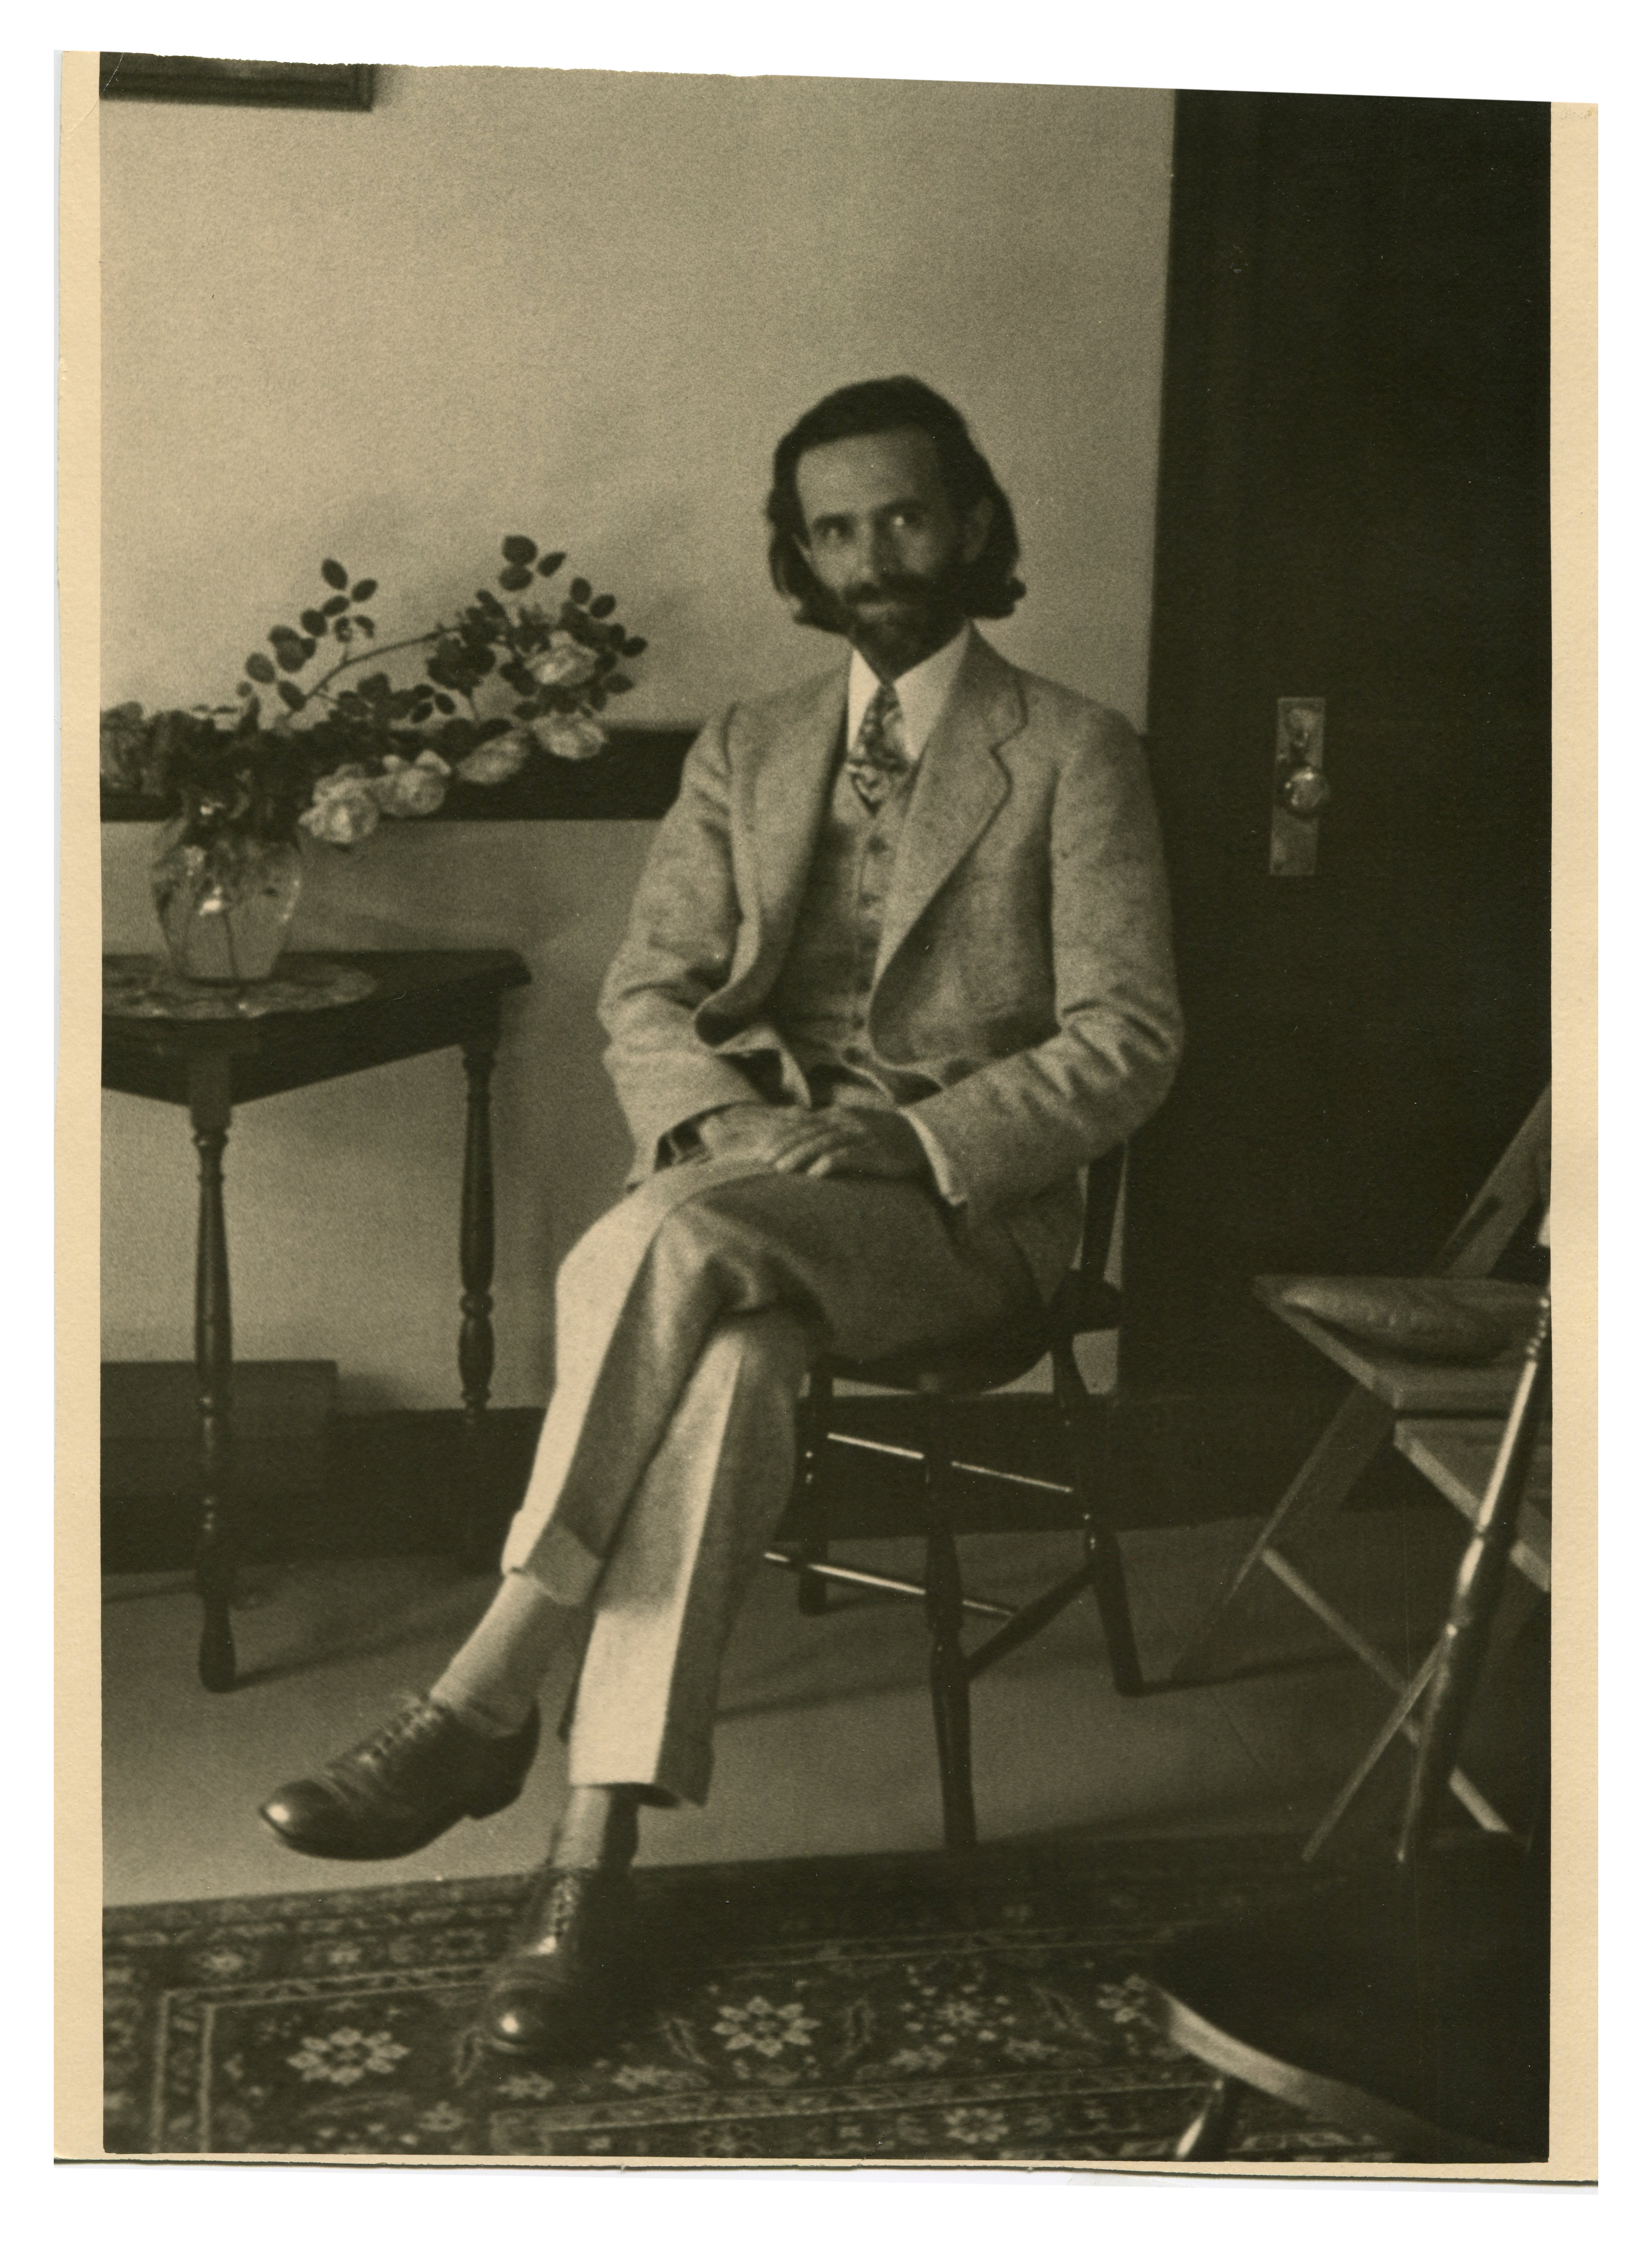 1914 Franklin as Stanford professor 1